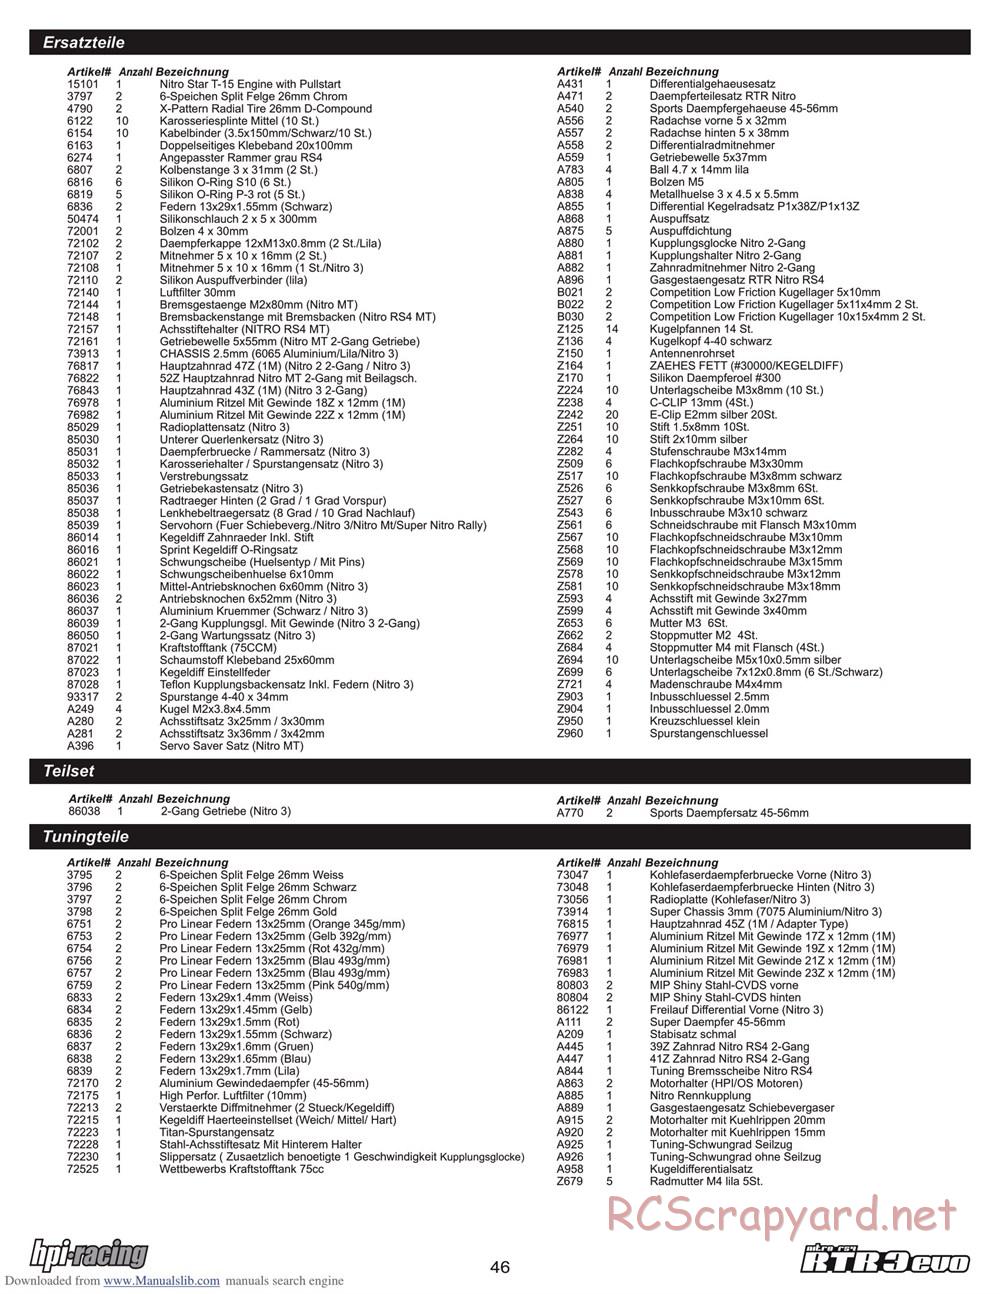 HPI - Nitro RS4 3 Evo - Manual - Page 46